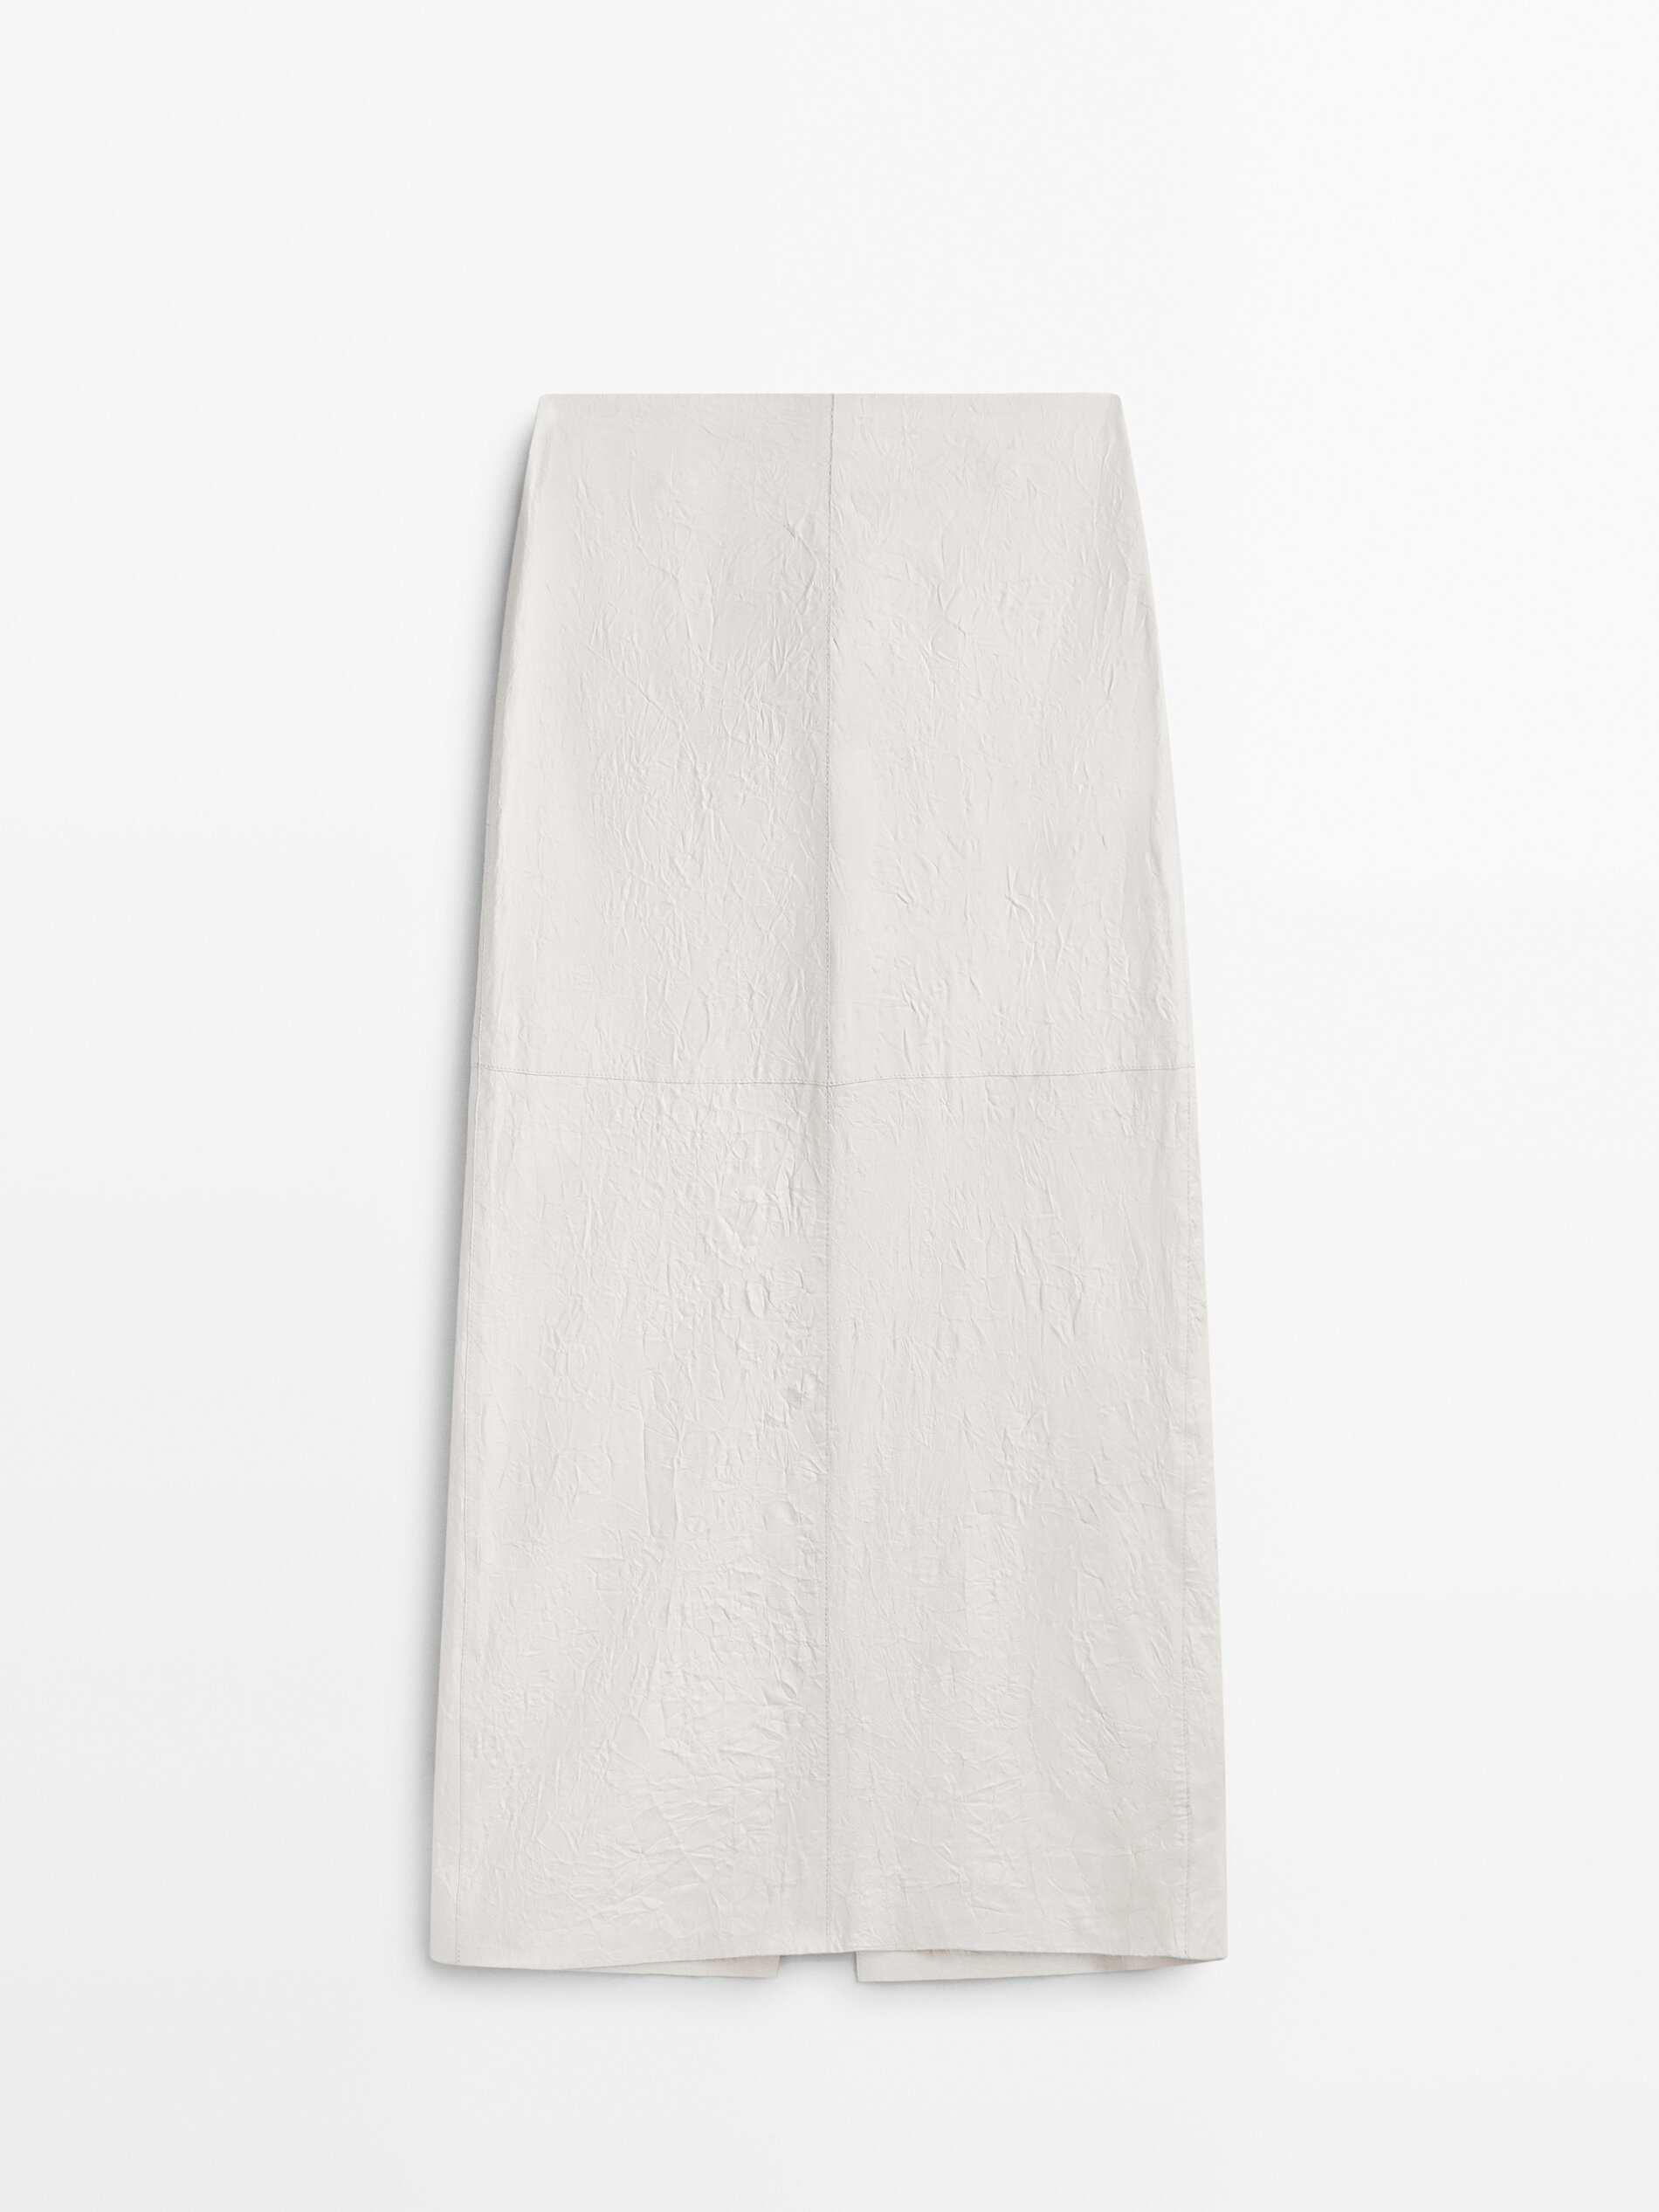 ALT: Estas son las 9 faldas de Massimo Dutti ms fciles de combinar esta primavera verano